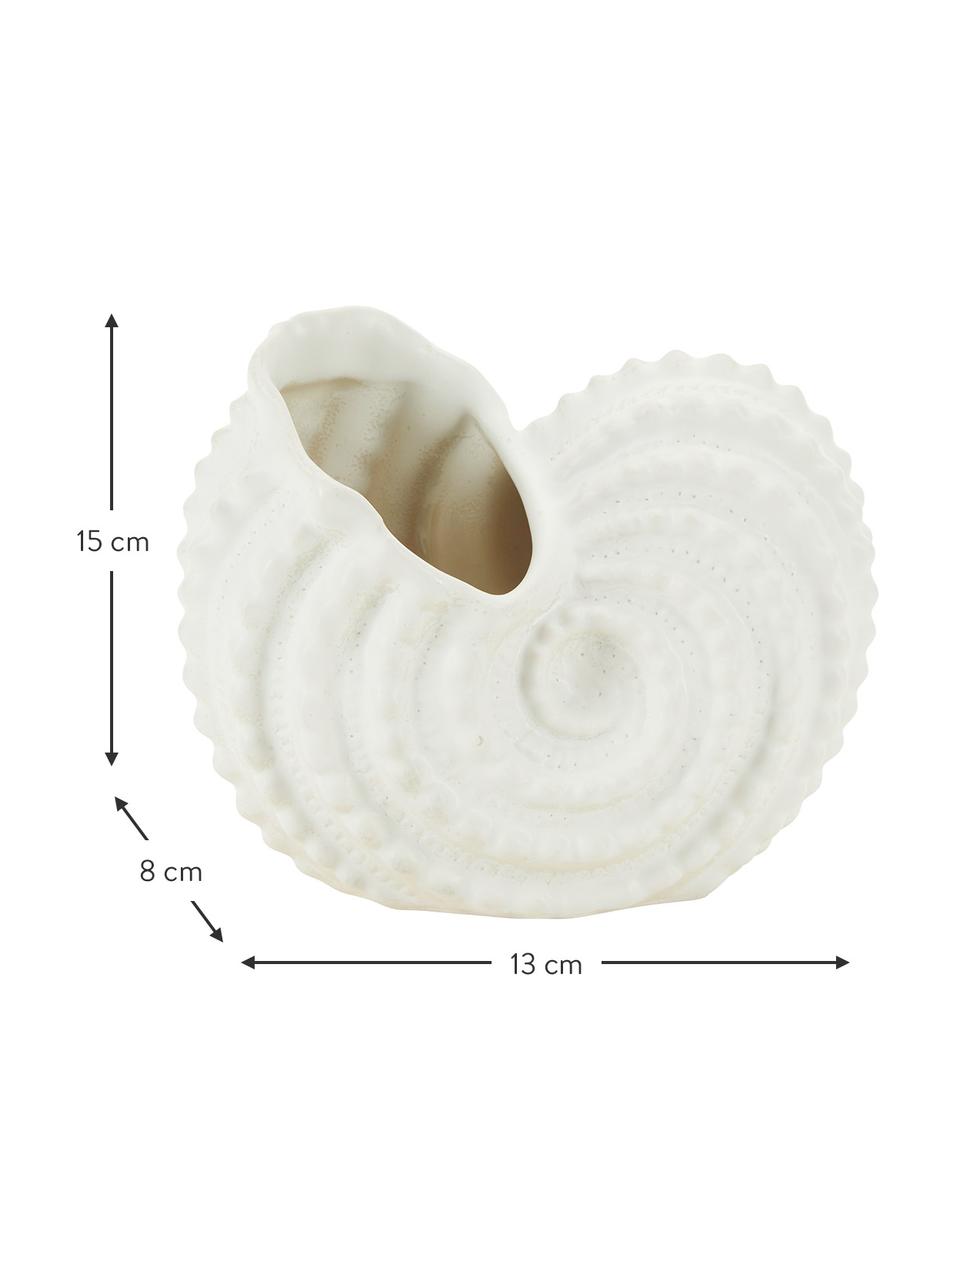 Objet décoratif grès cérame blanc Snail, Grès cérame, Blanc, larg. 13 x haut. 15 cm